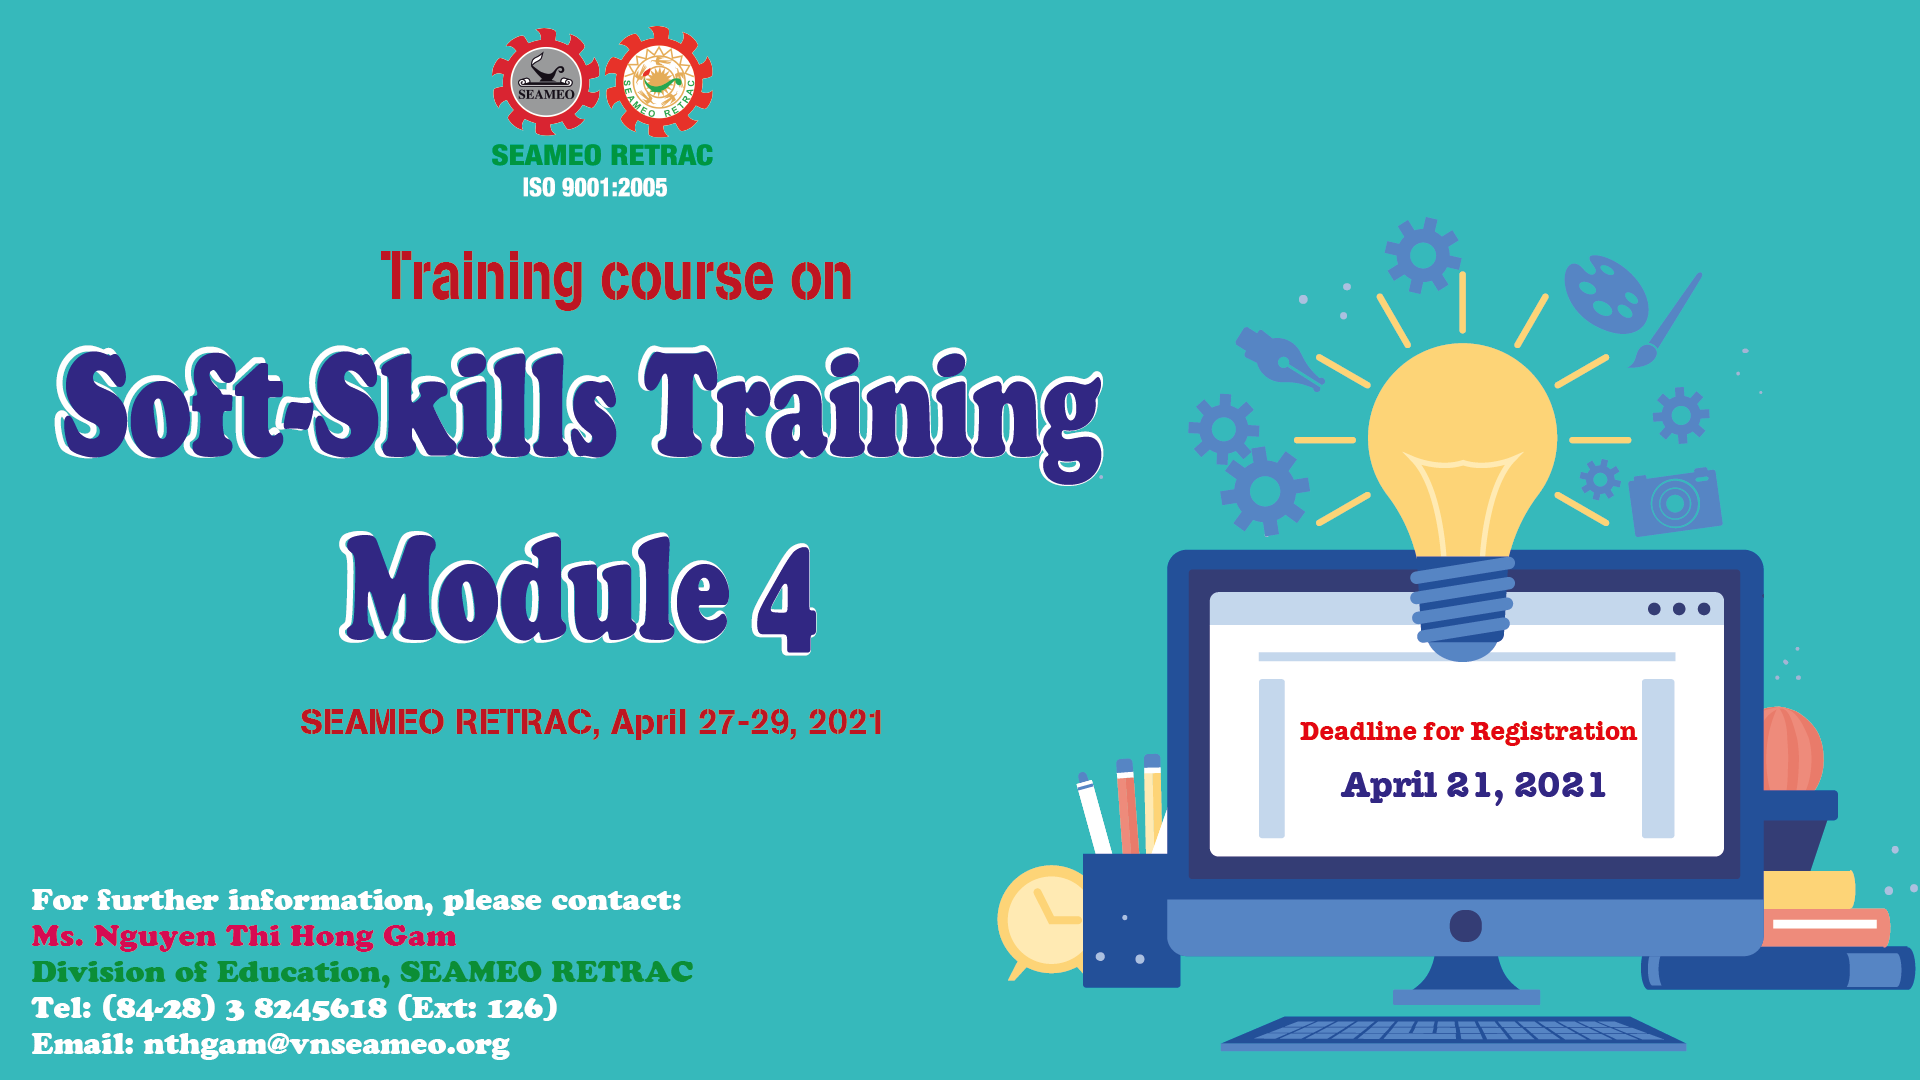 Training course on “Soft-Skills Training – Module 4”, April 27-29, 2021